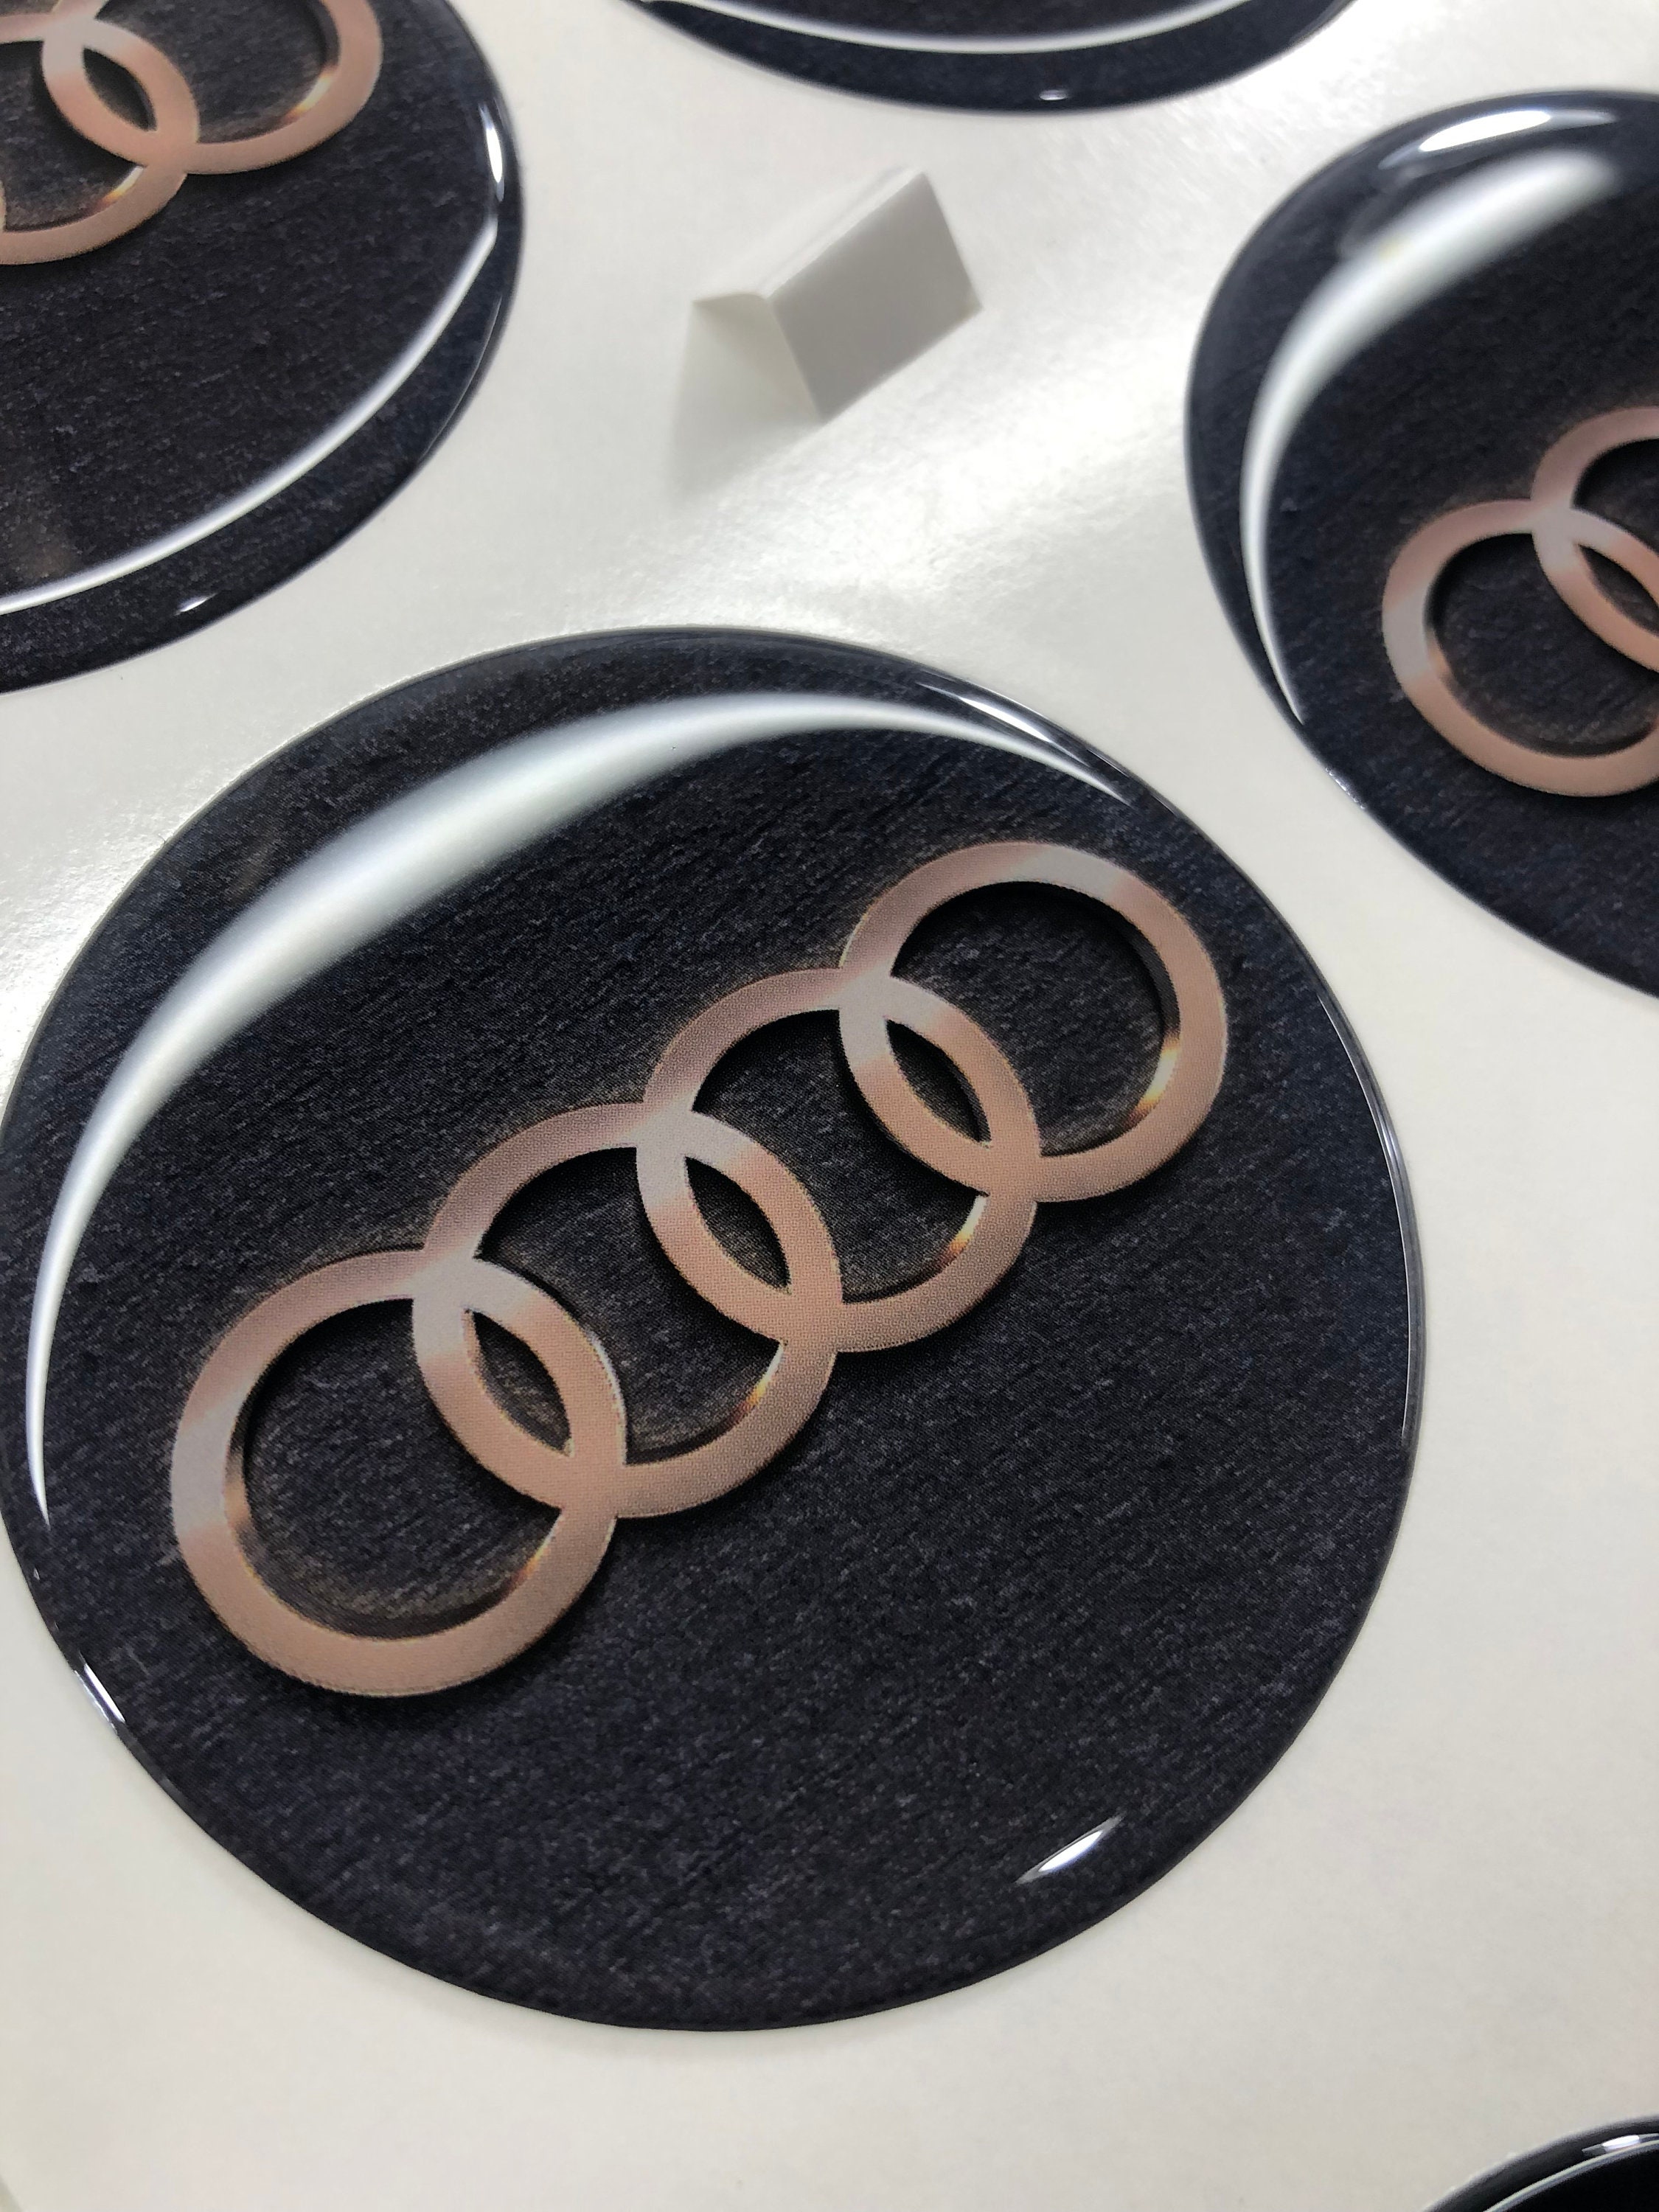 Audi Ringe Aufkleber für Räder 